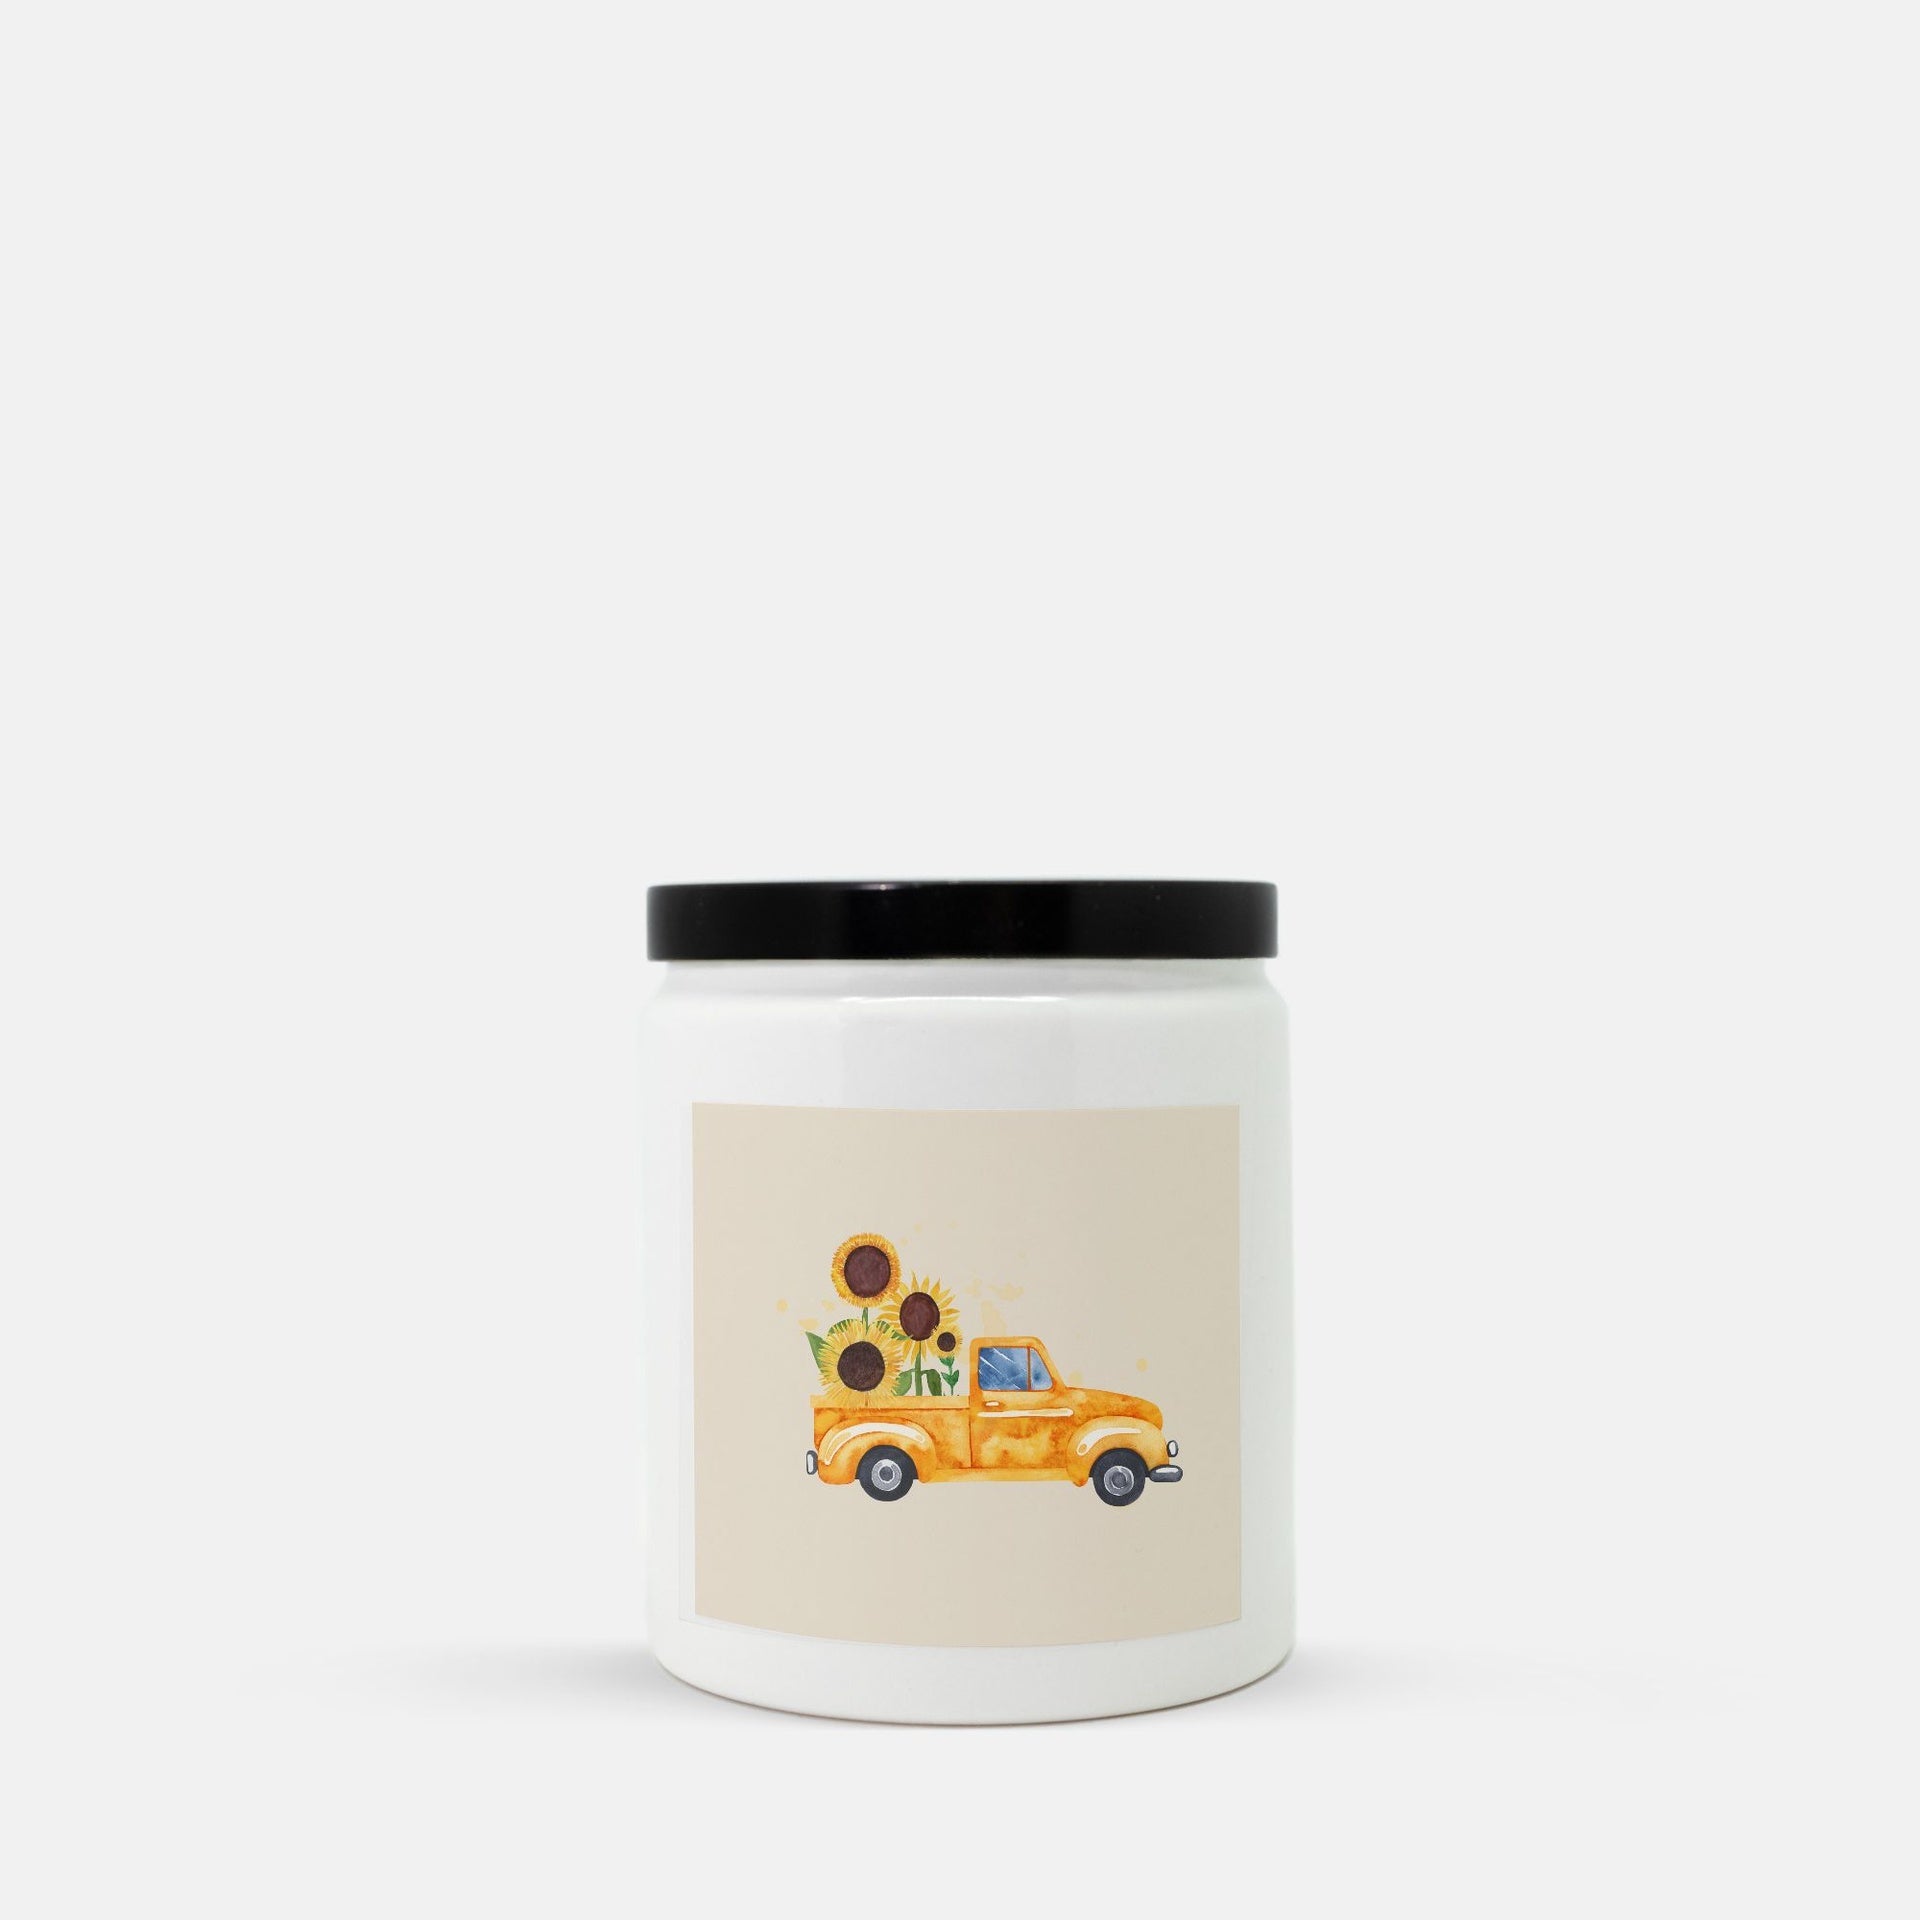 Lifestyle Details - Orange Rustic Truck & Sunflowers Ceramic Candle w Black Lid - Vanilla Bean